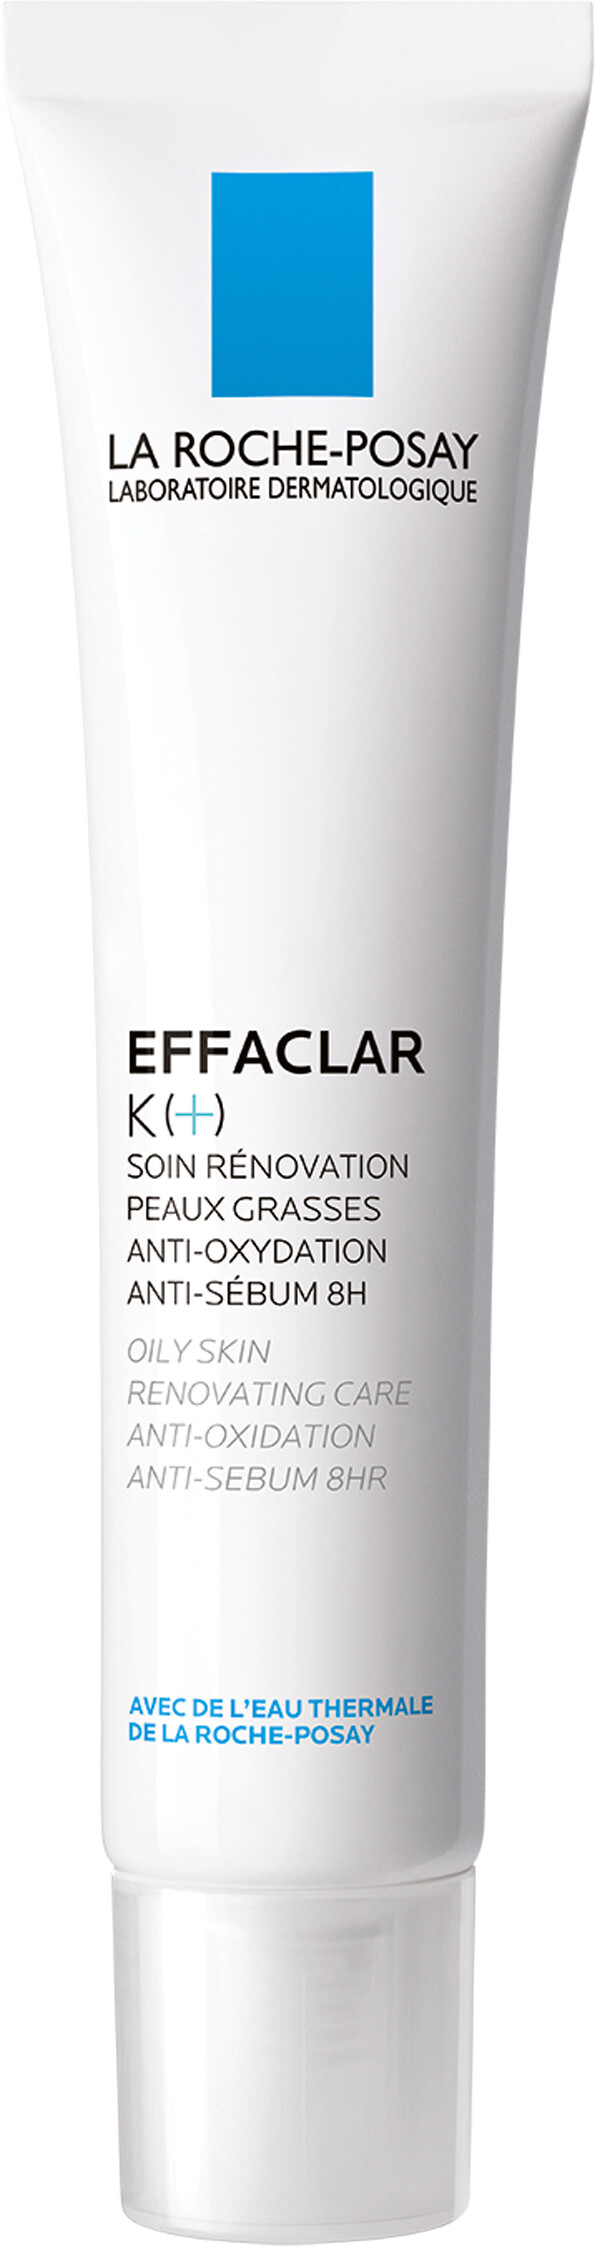 La Roche-Posay Effaclar K [+] - Renovating Care for Oily Skin 40ml